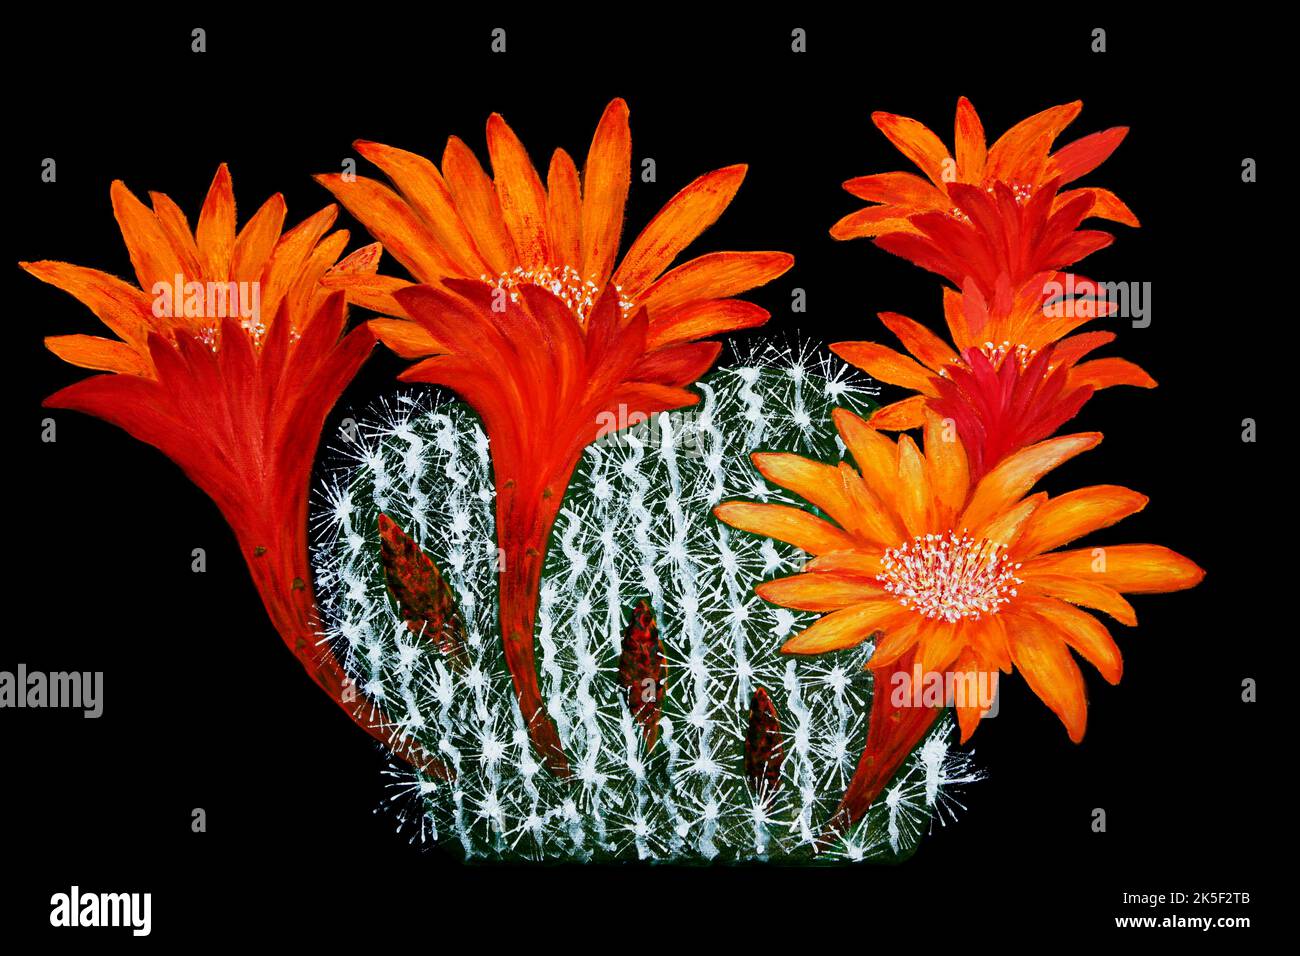 Oil painting of Orange cactus flowers in bloom Stock Photo